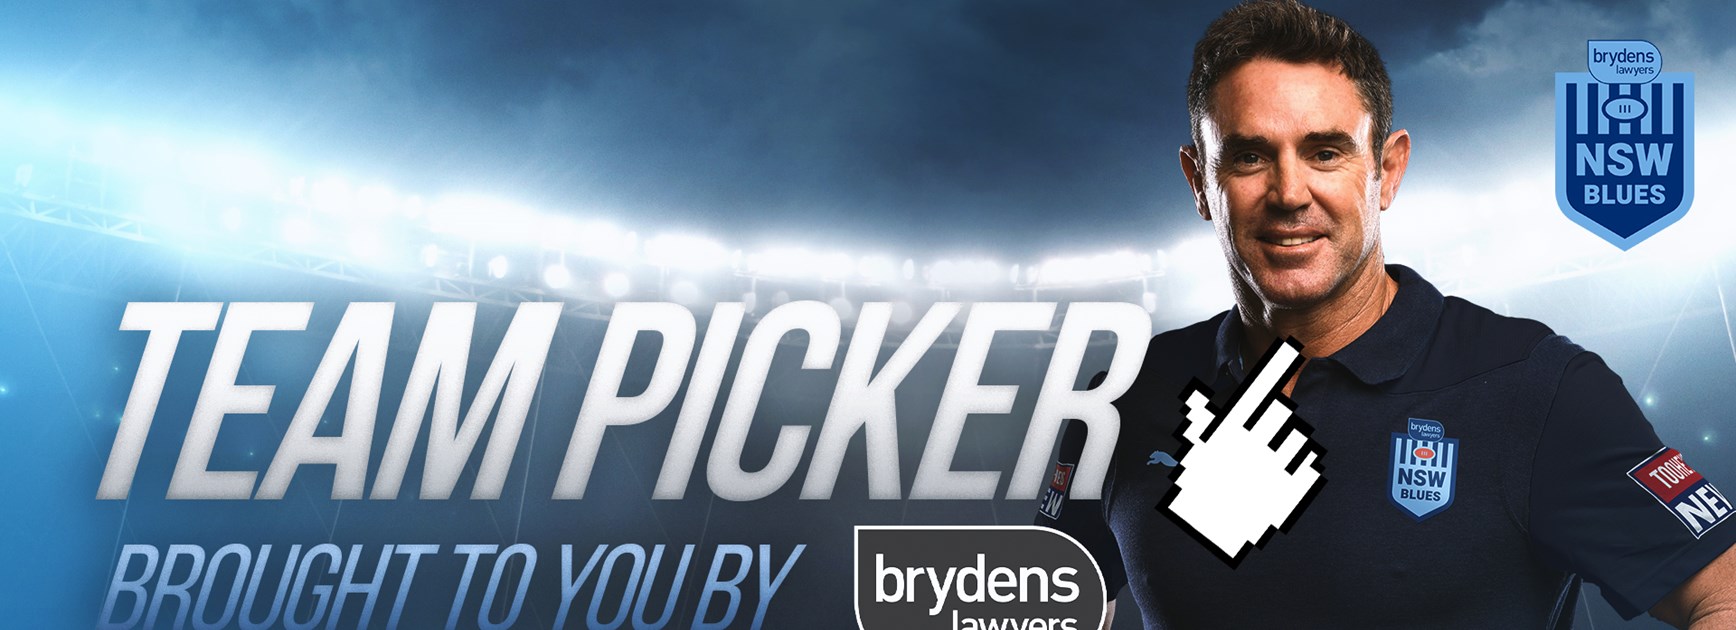 Brydens Lawyers NSW Blues Team Picker